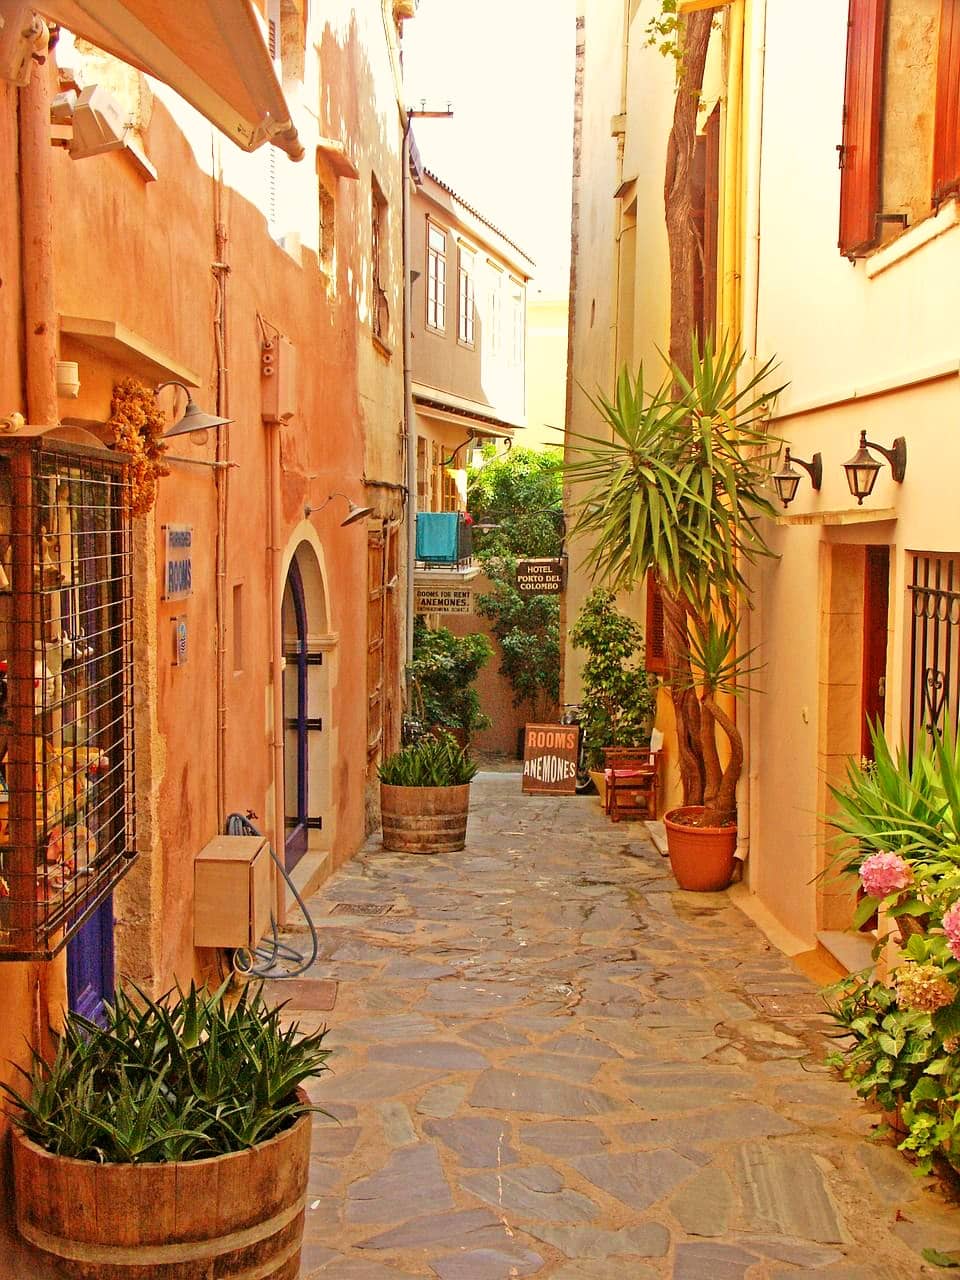 Old street in Crete